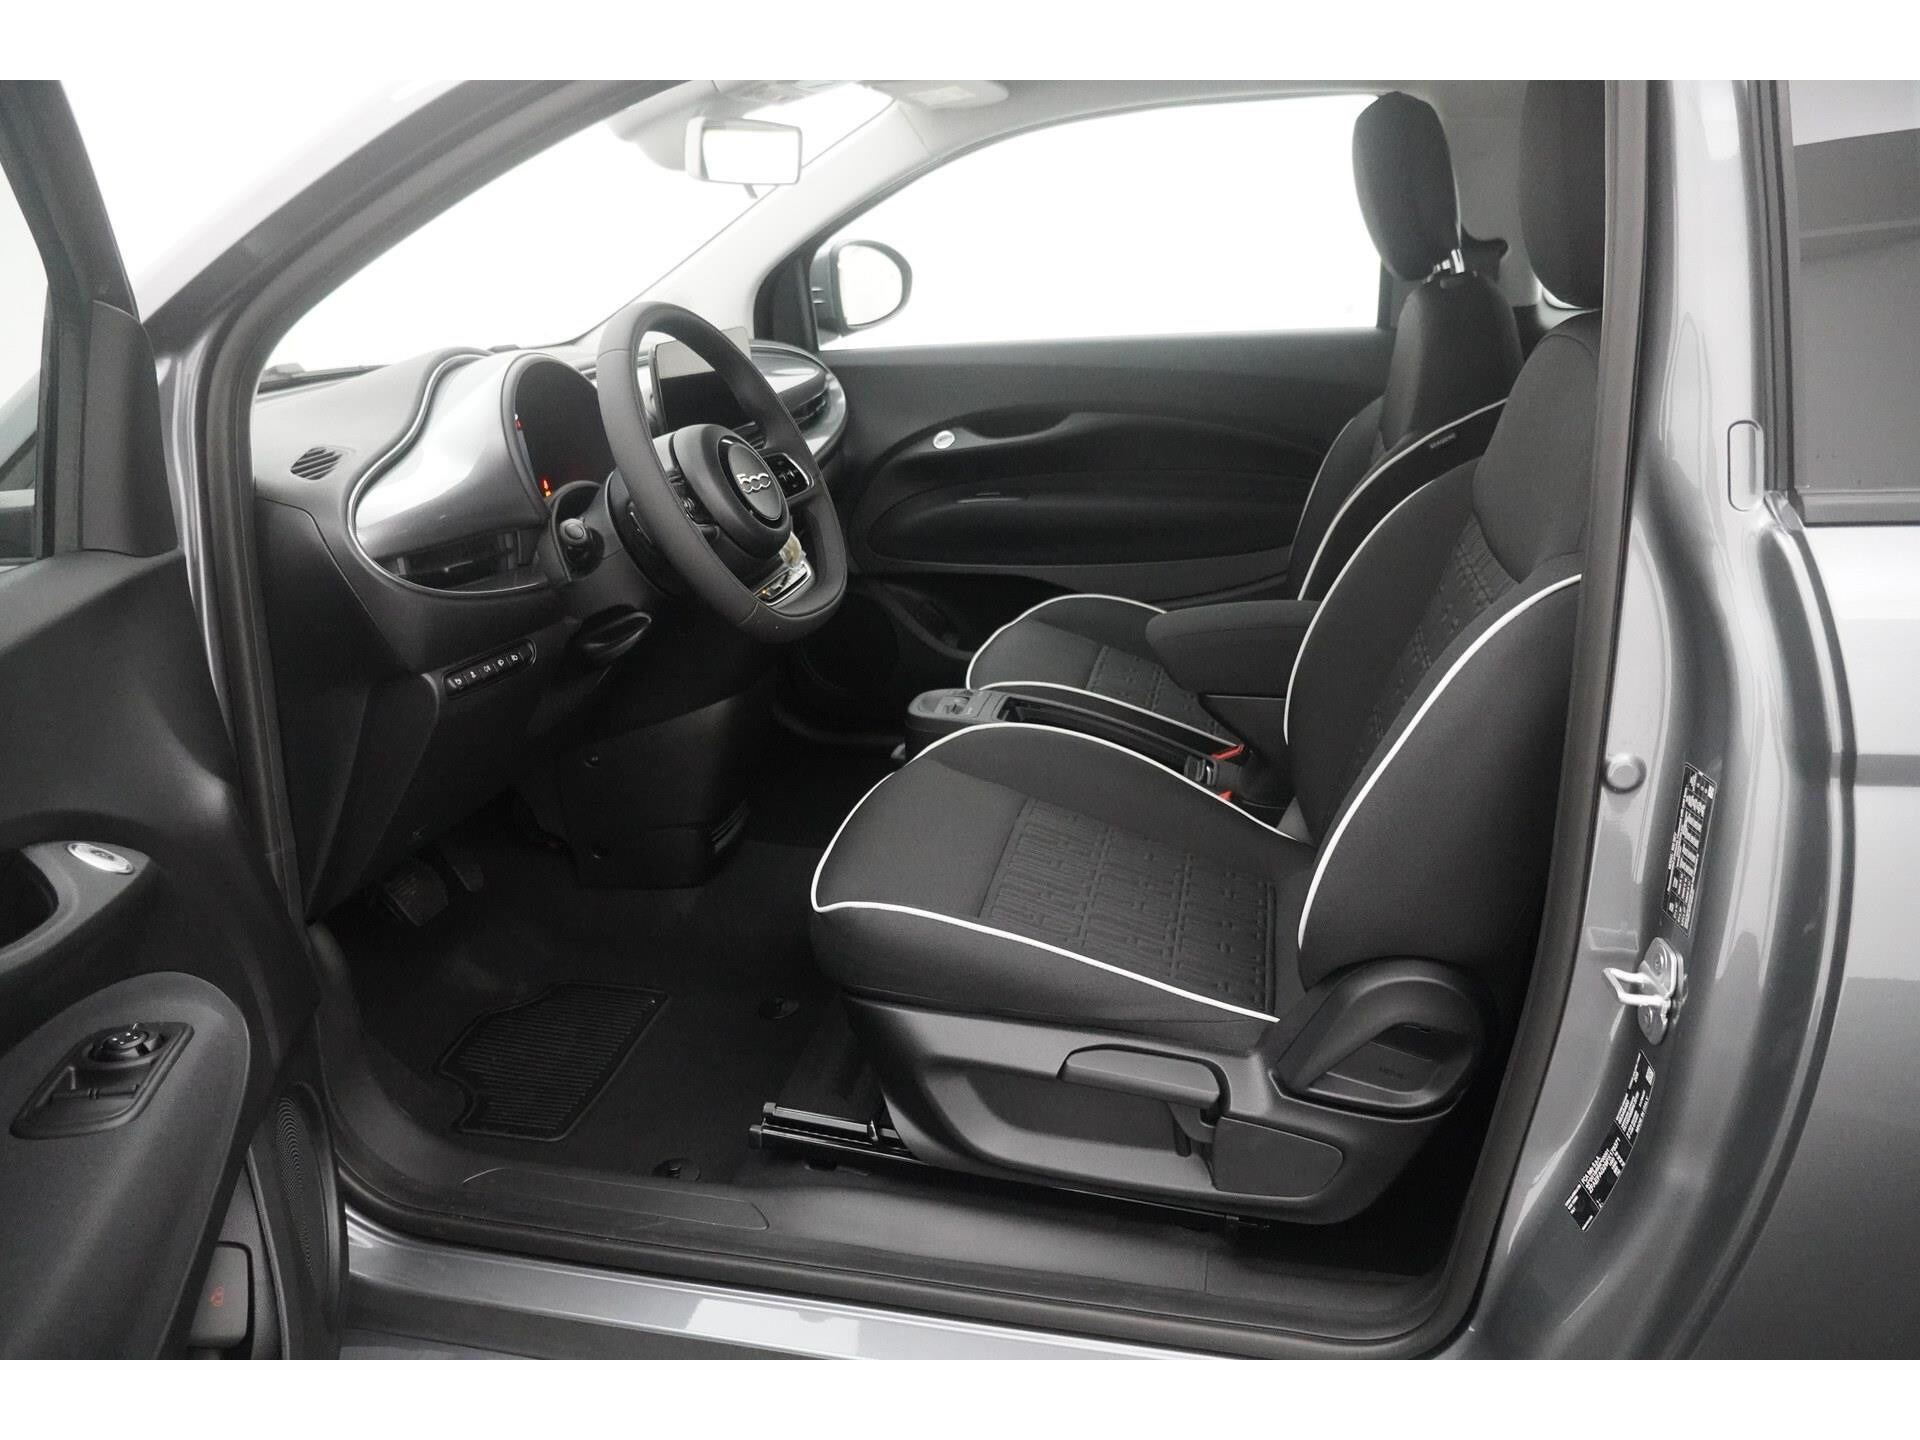 Fiat 500C Cabrio 24 kWh | Hedin Automotive Actie Auto van €35.390,- voor €29.945,- | Direct leverbaar | Elektrisch | Cabrio | Keyless Entry & Go | Camera | 360 graden parkeersensoren | Stoelverwarming |